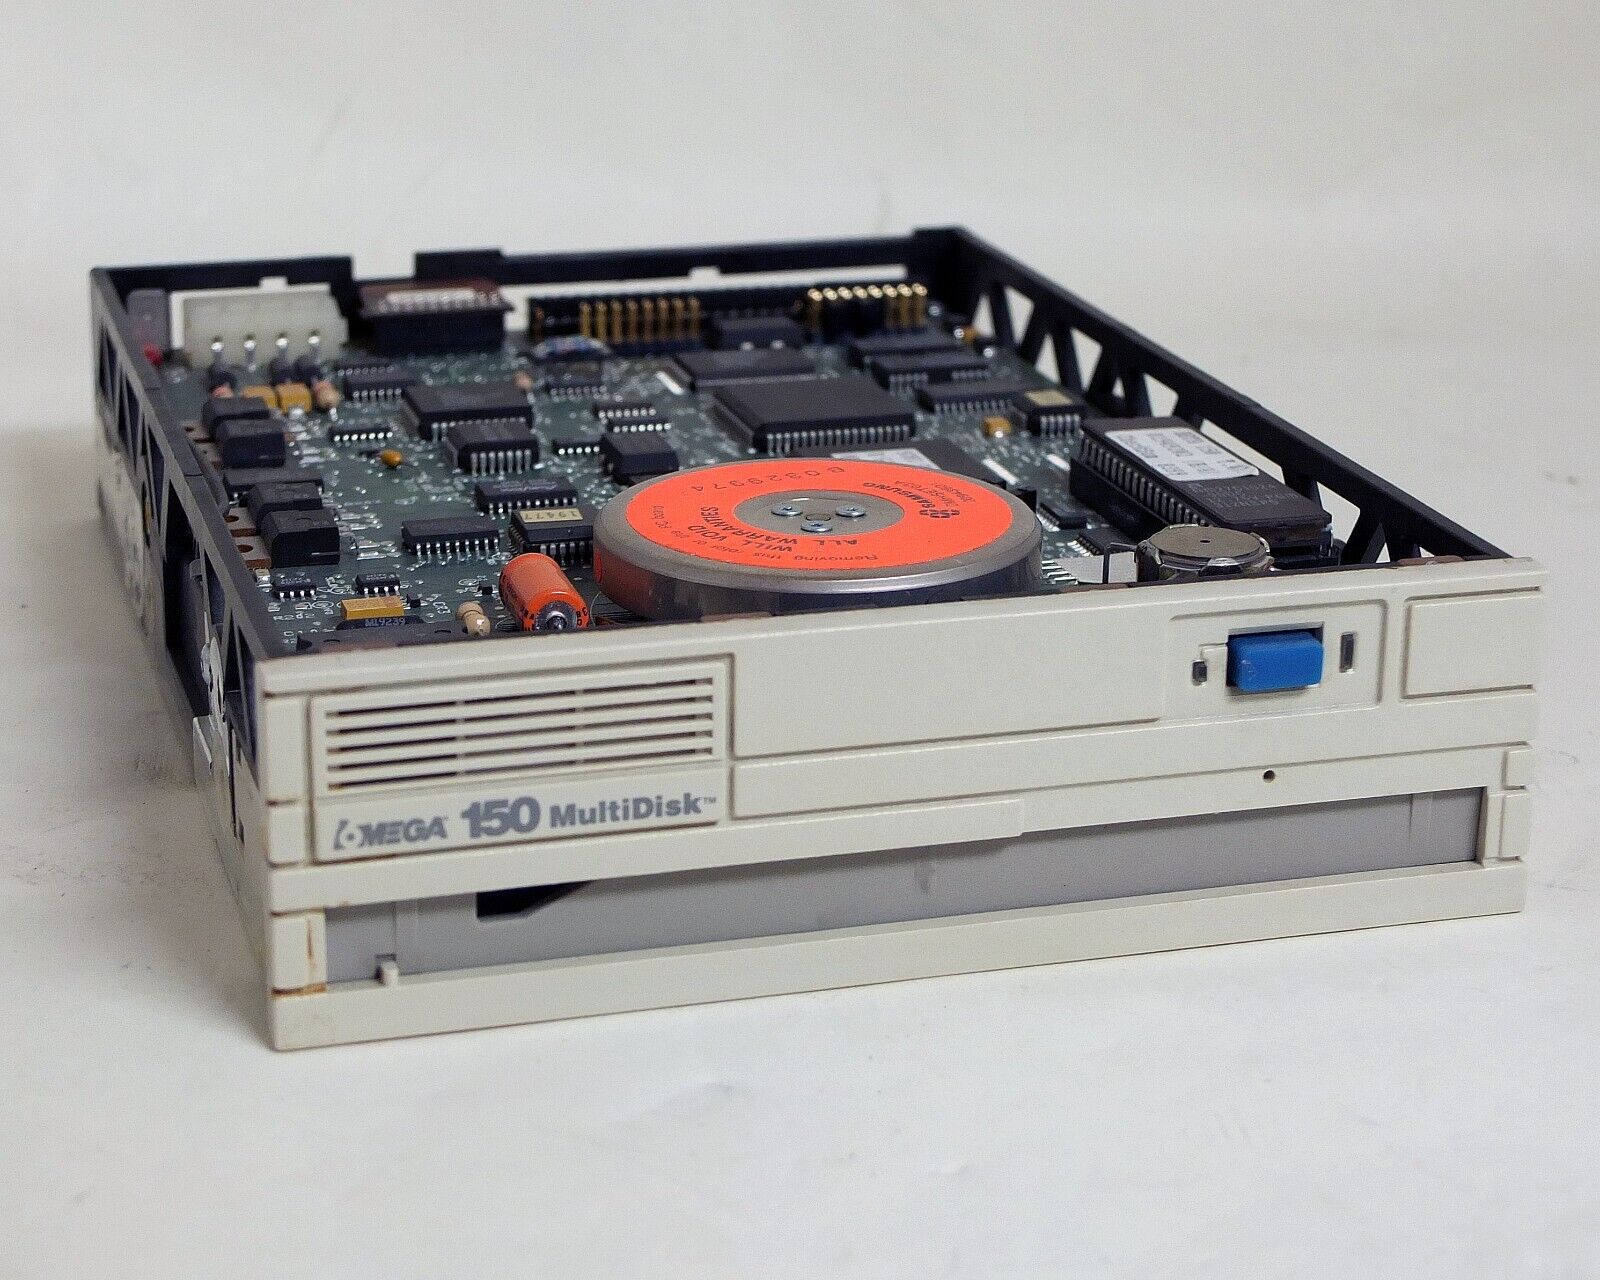 Iomega 150 MultiDisk Disk Drive Used Model Drives